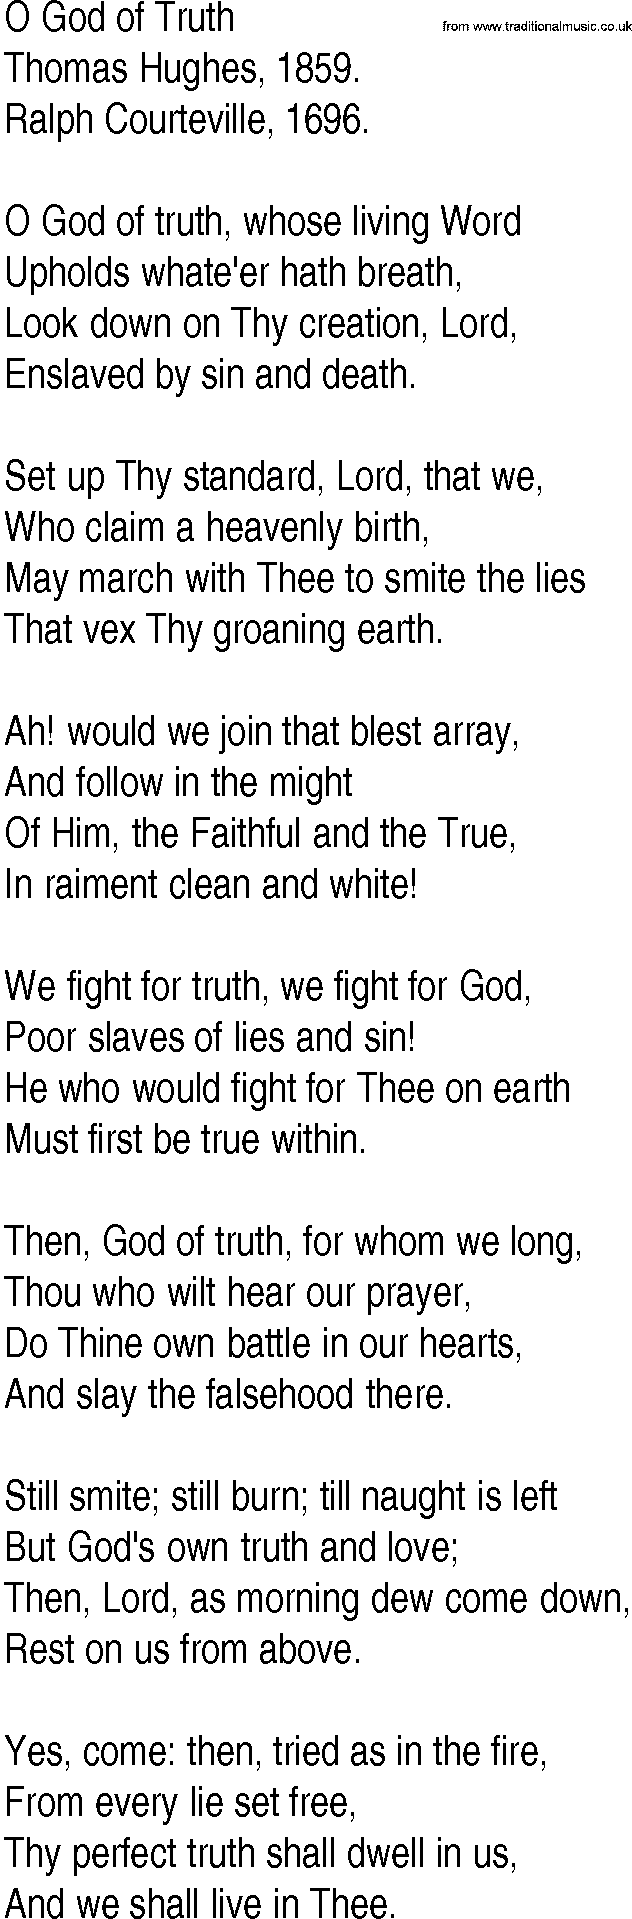 Hymn and Gospel Song: O God of Truth by Thomas Hughes lyrics